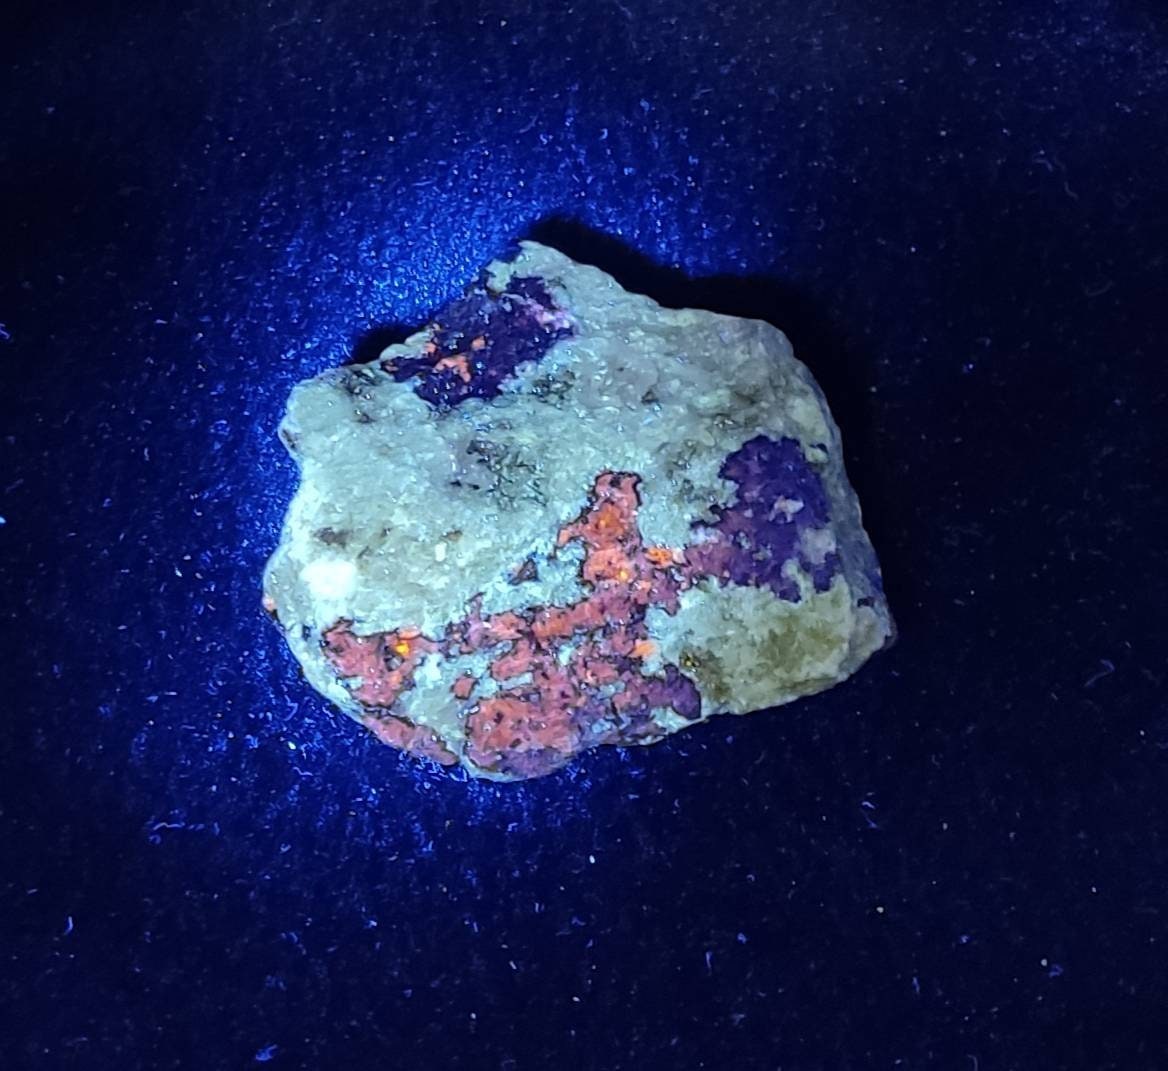 Amazing specimen of fluorescent Lazurite on matrix with pyrite 173 grams